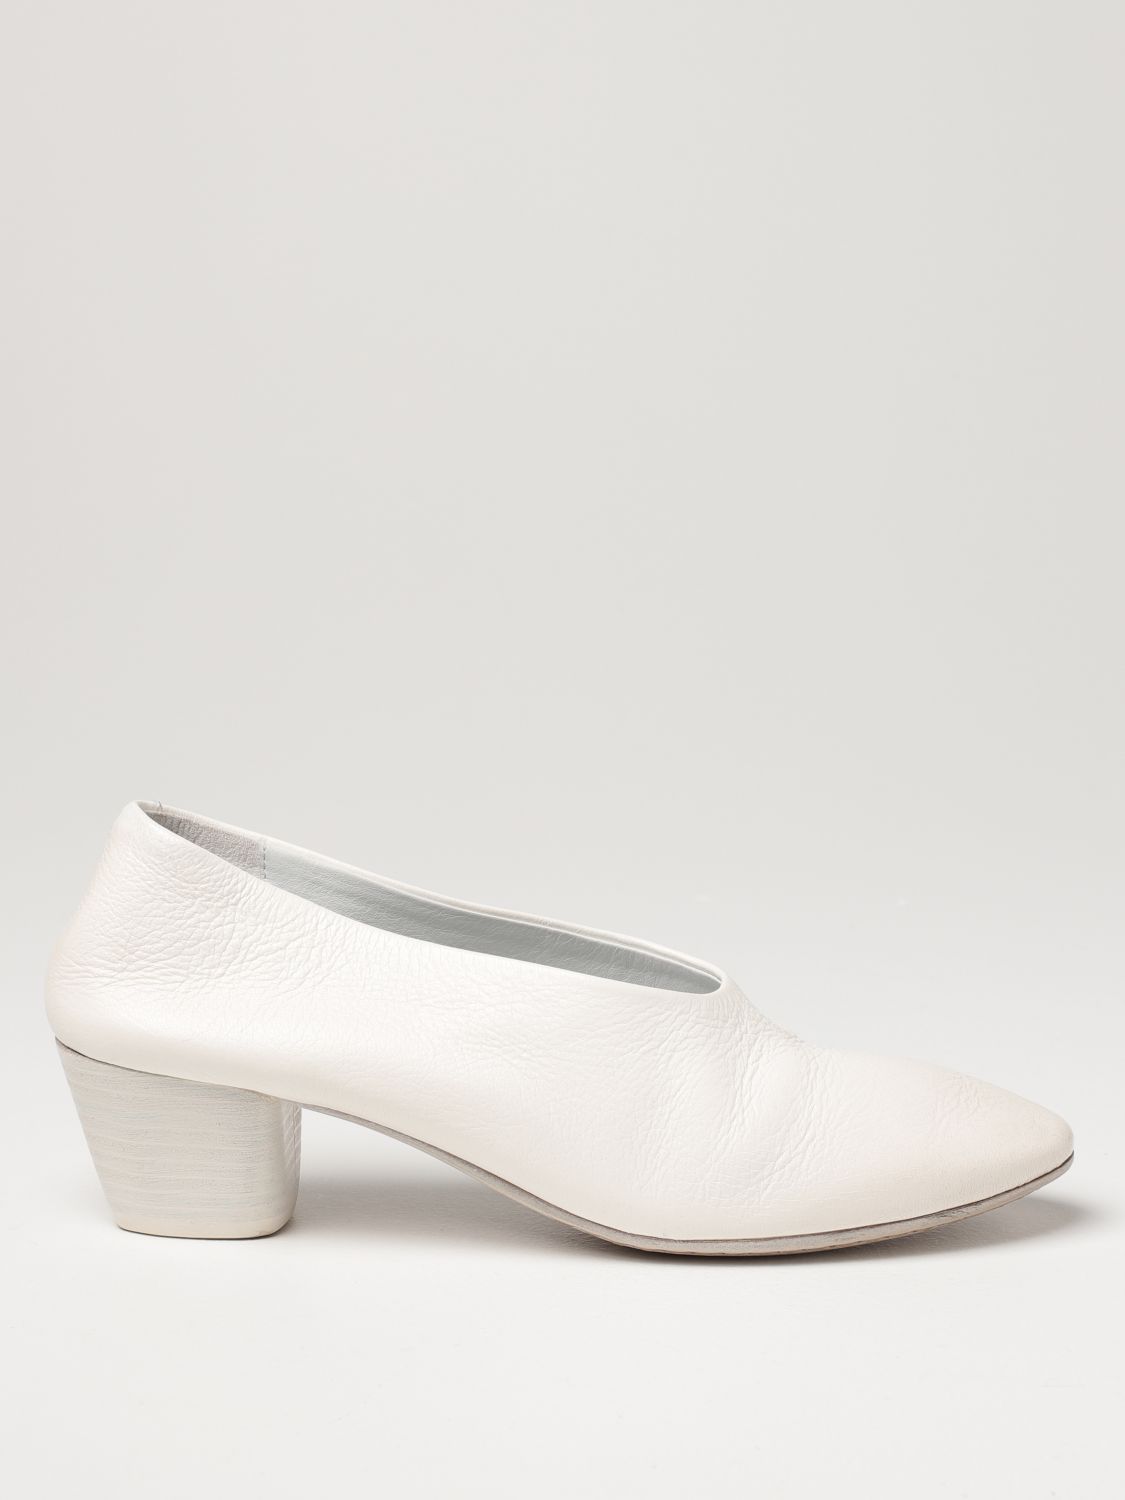 Escarpins Marsèll: Chaussures femme Marsell blanc 1